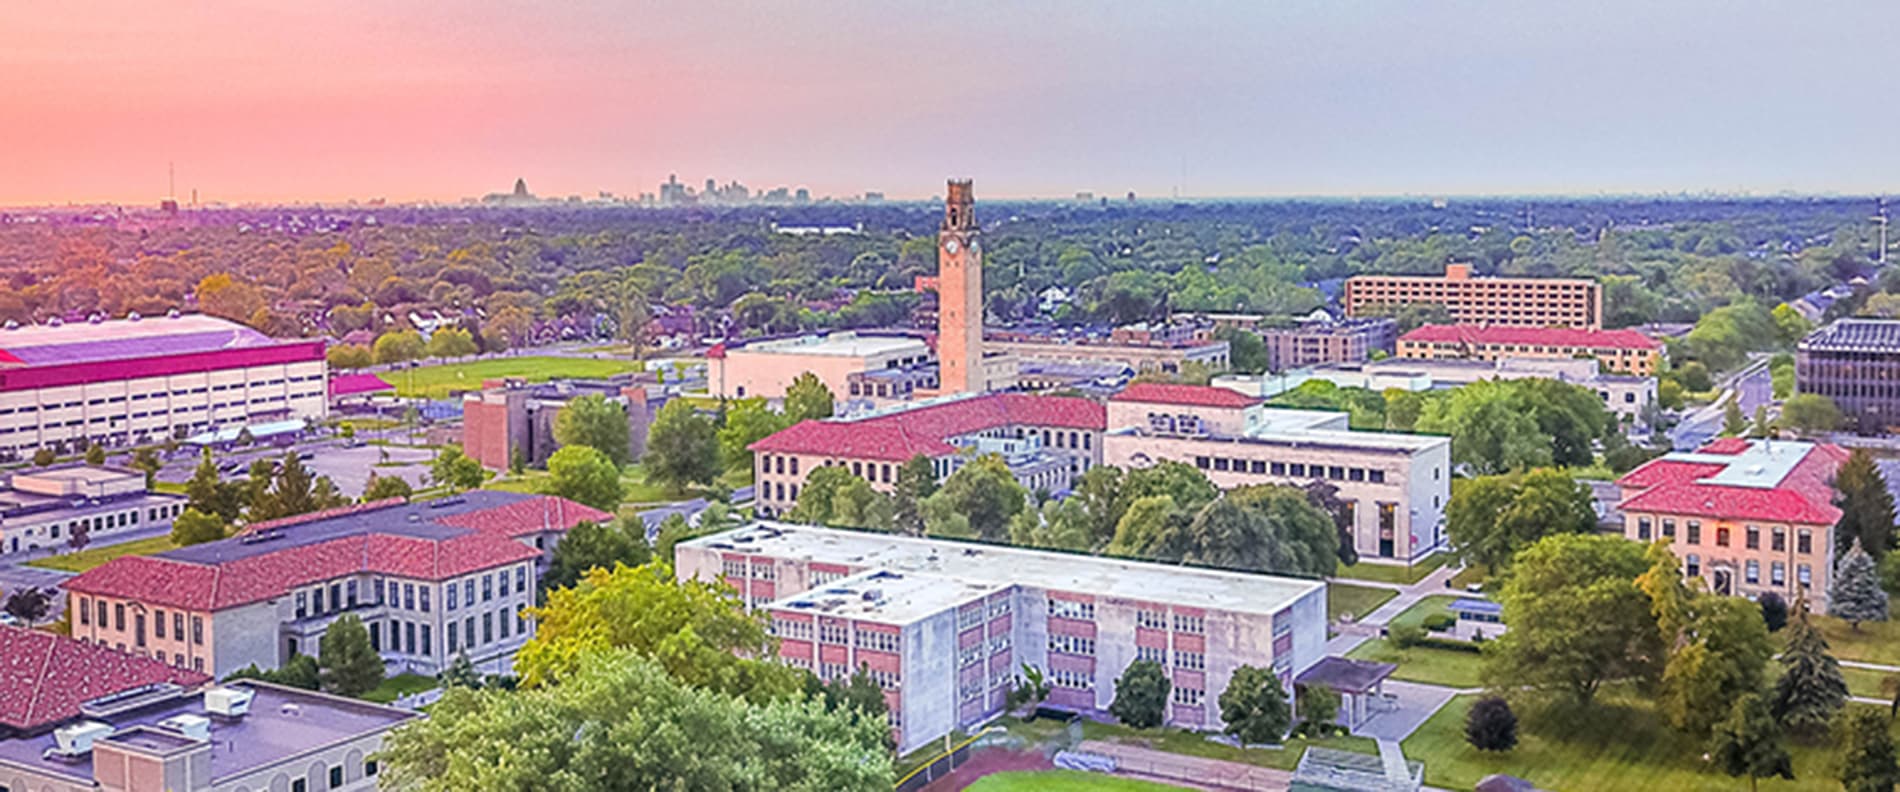 Detroit Mercy ranks again among top U.S. universities in U.S. News